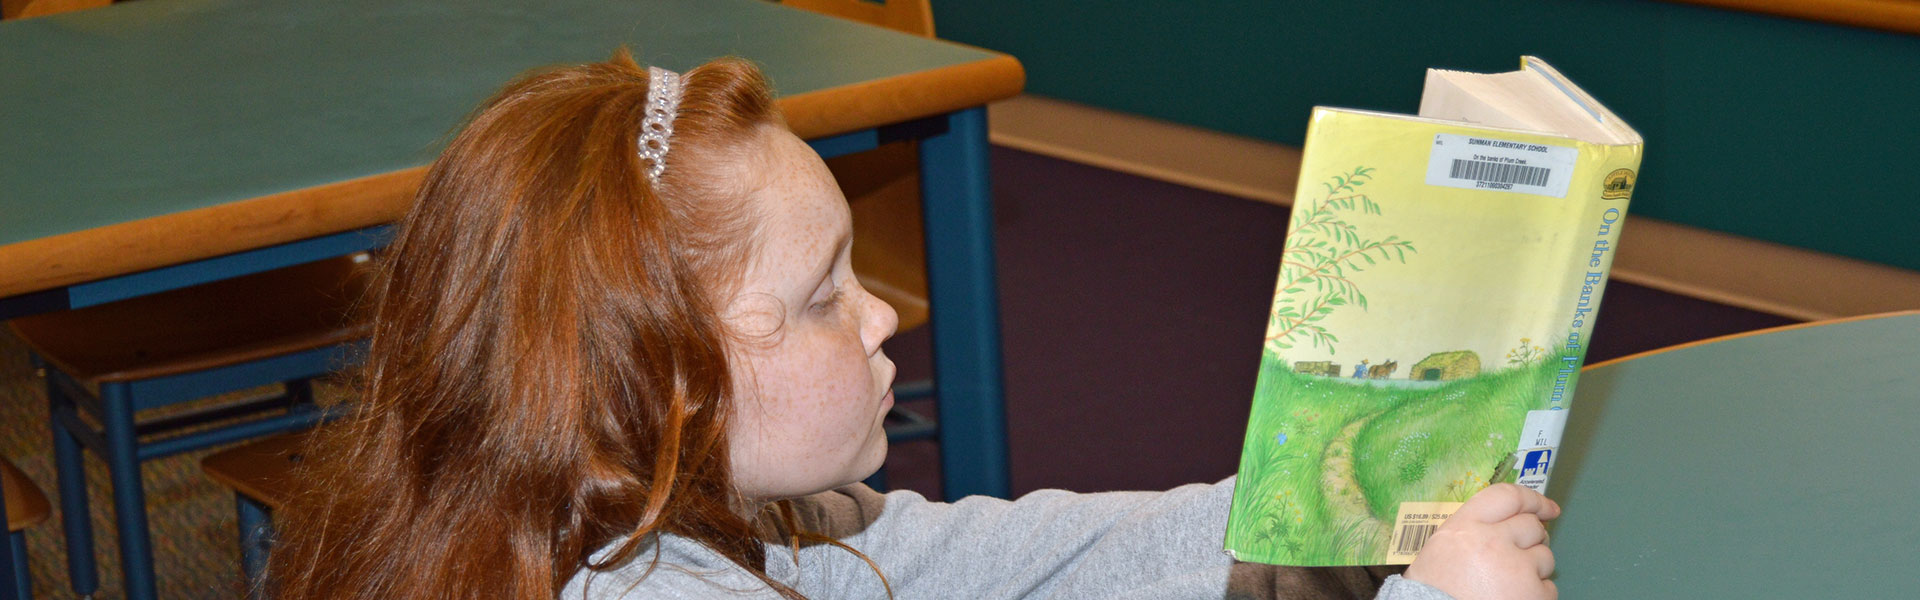 Sunman Elementary School Student Reading a Book